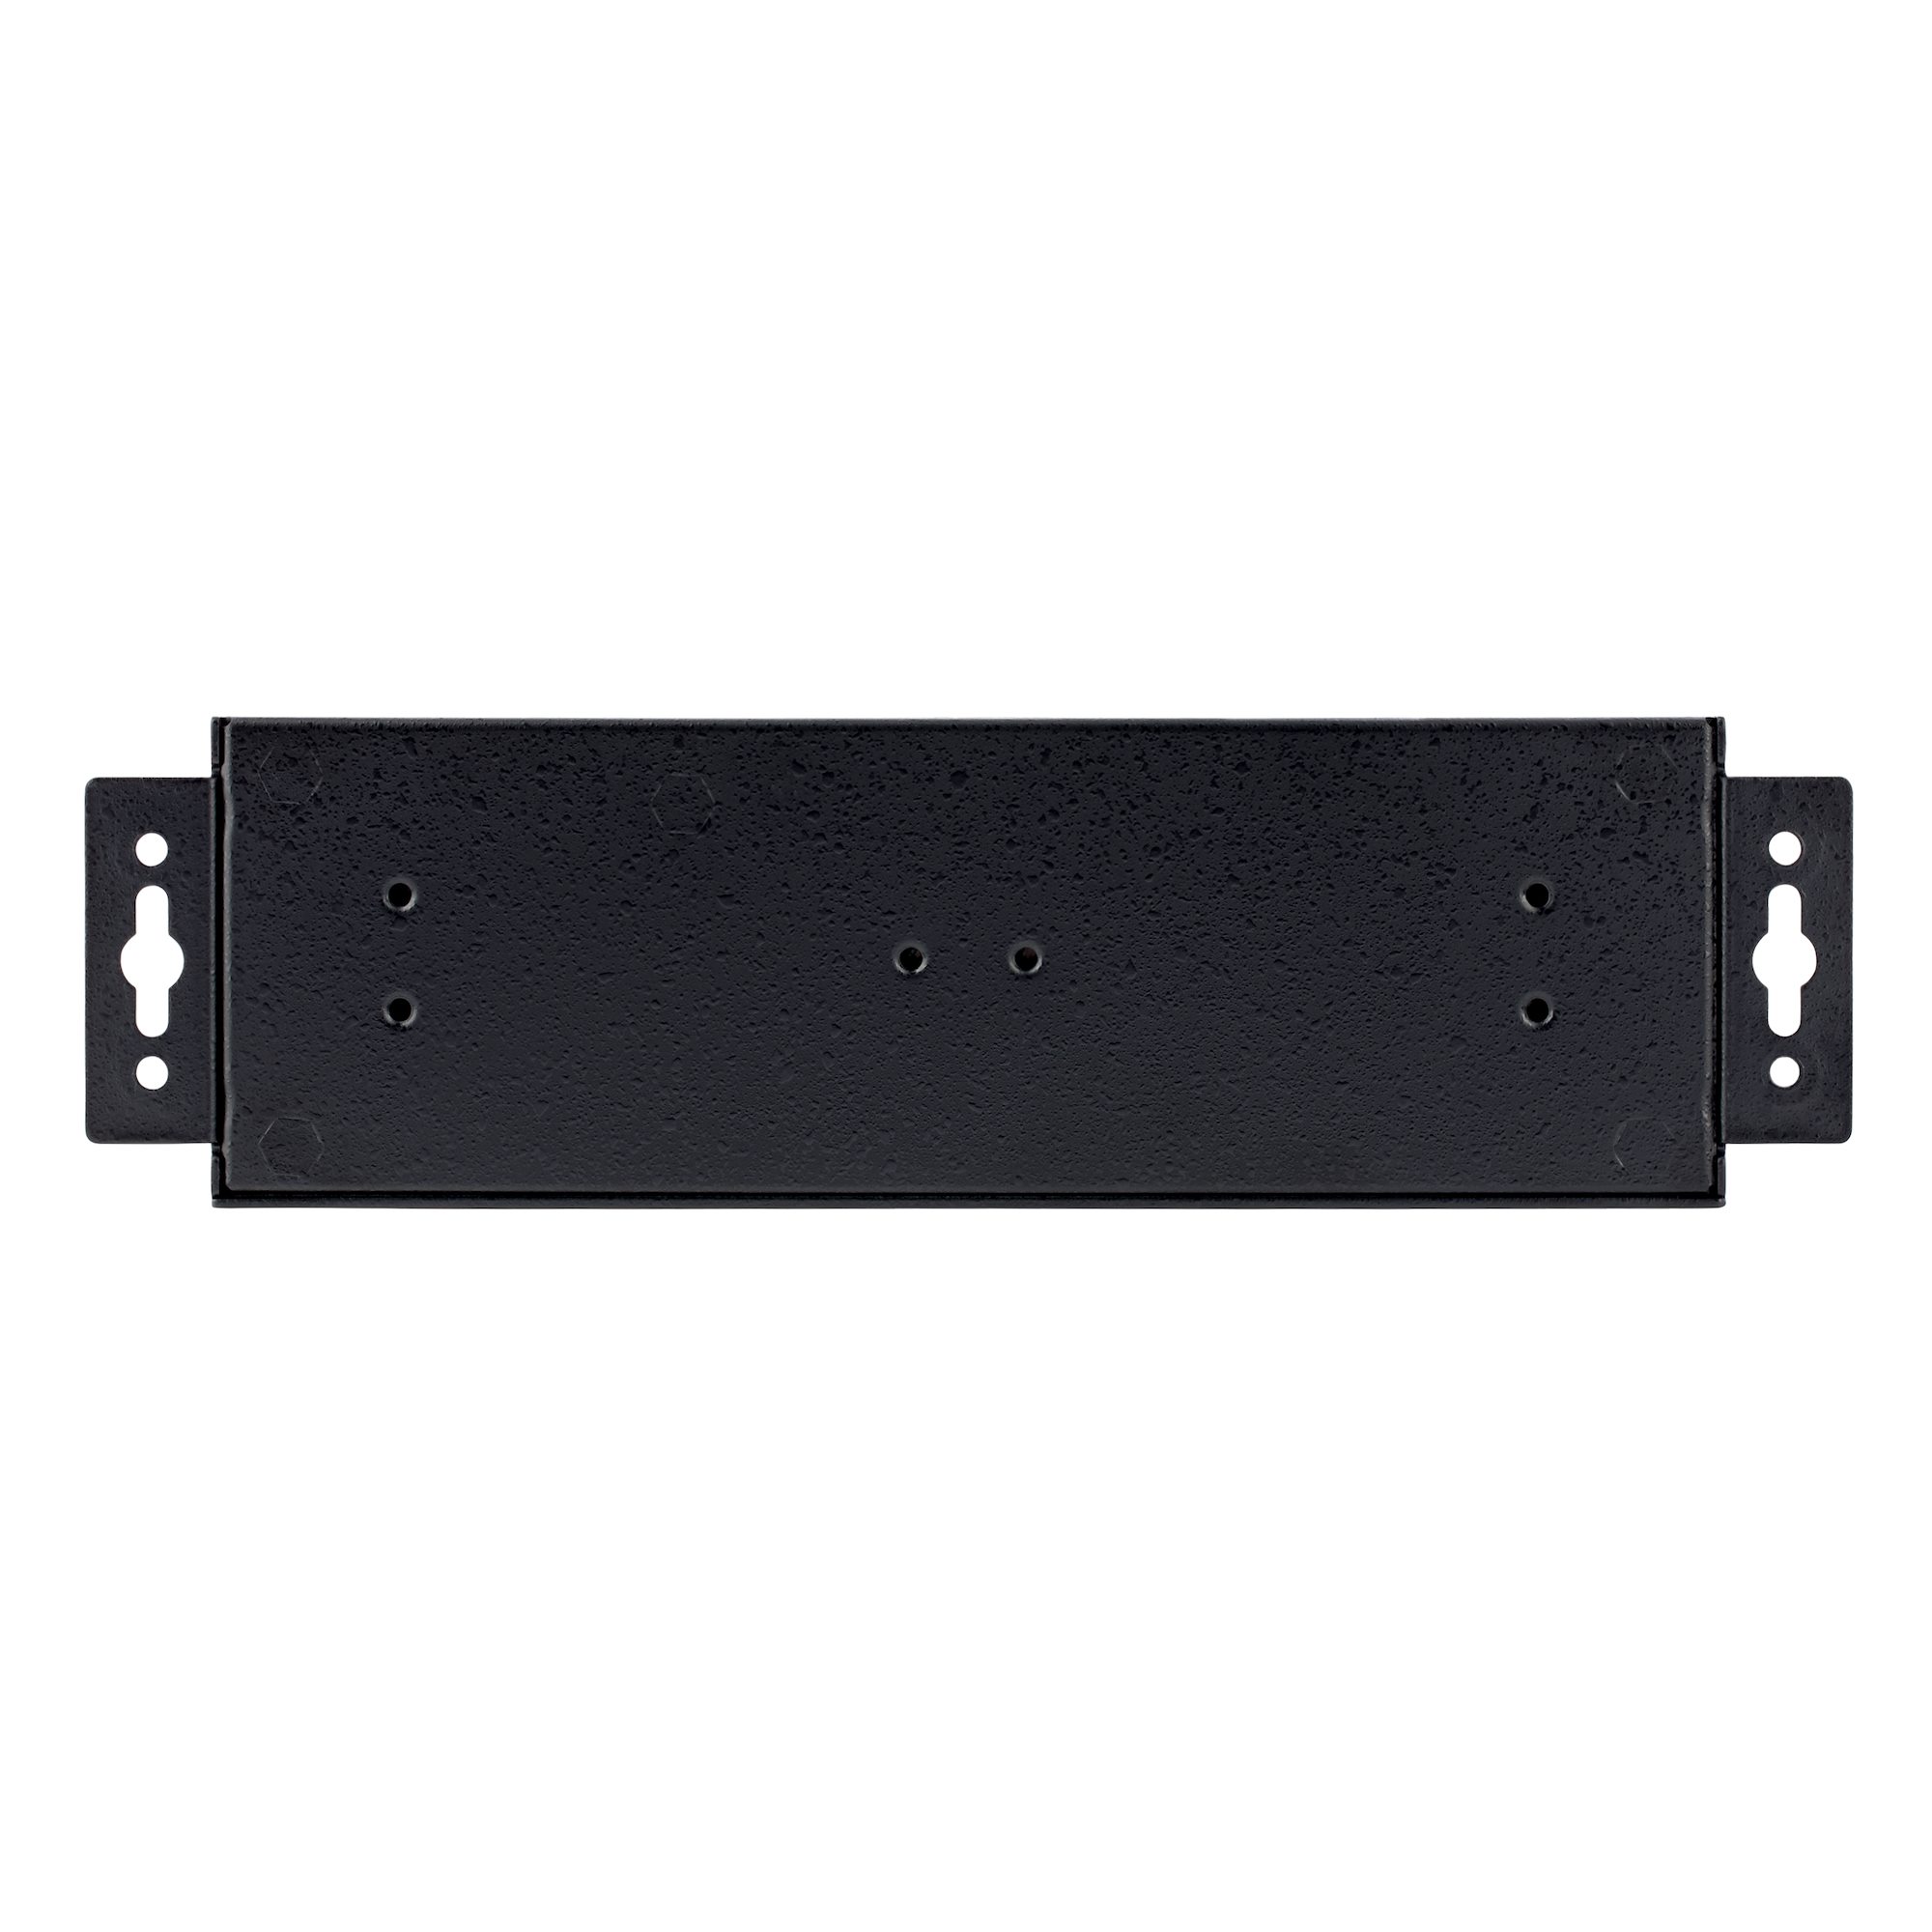 USB 3.2 Gen 1 10 Port Industrial Metal Hub w/15KV ESD Protection